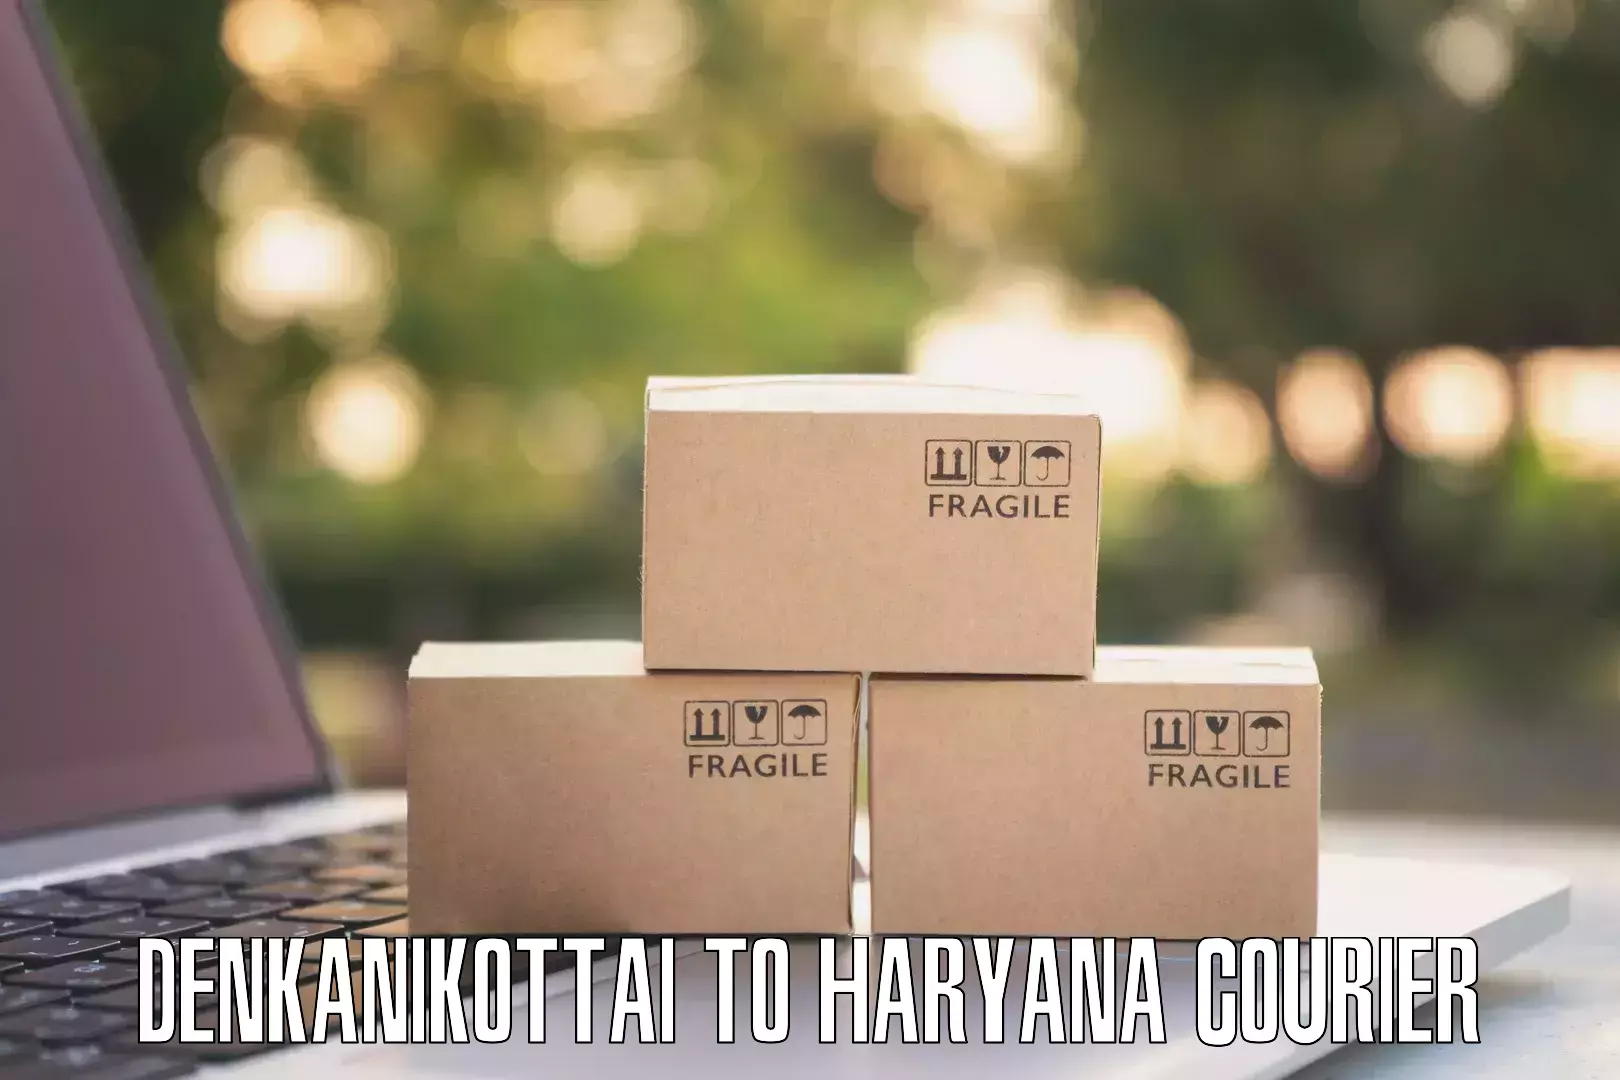 High-capacity shipping options Denkanikottai to Haryana